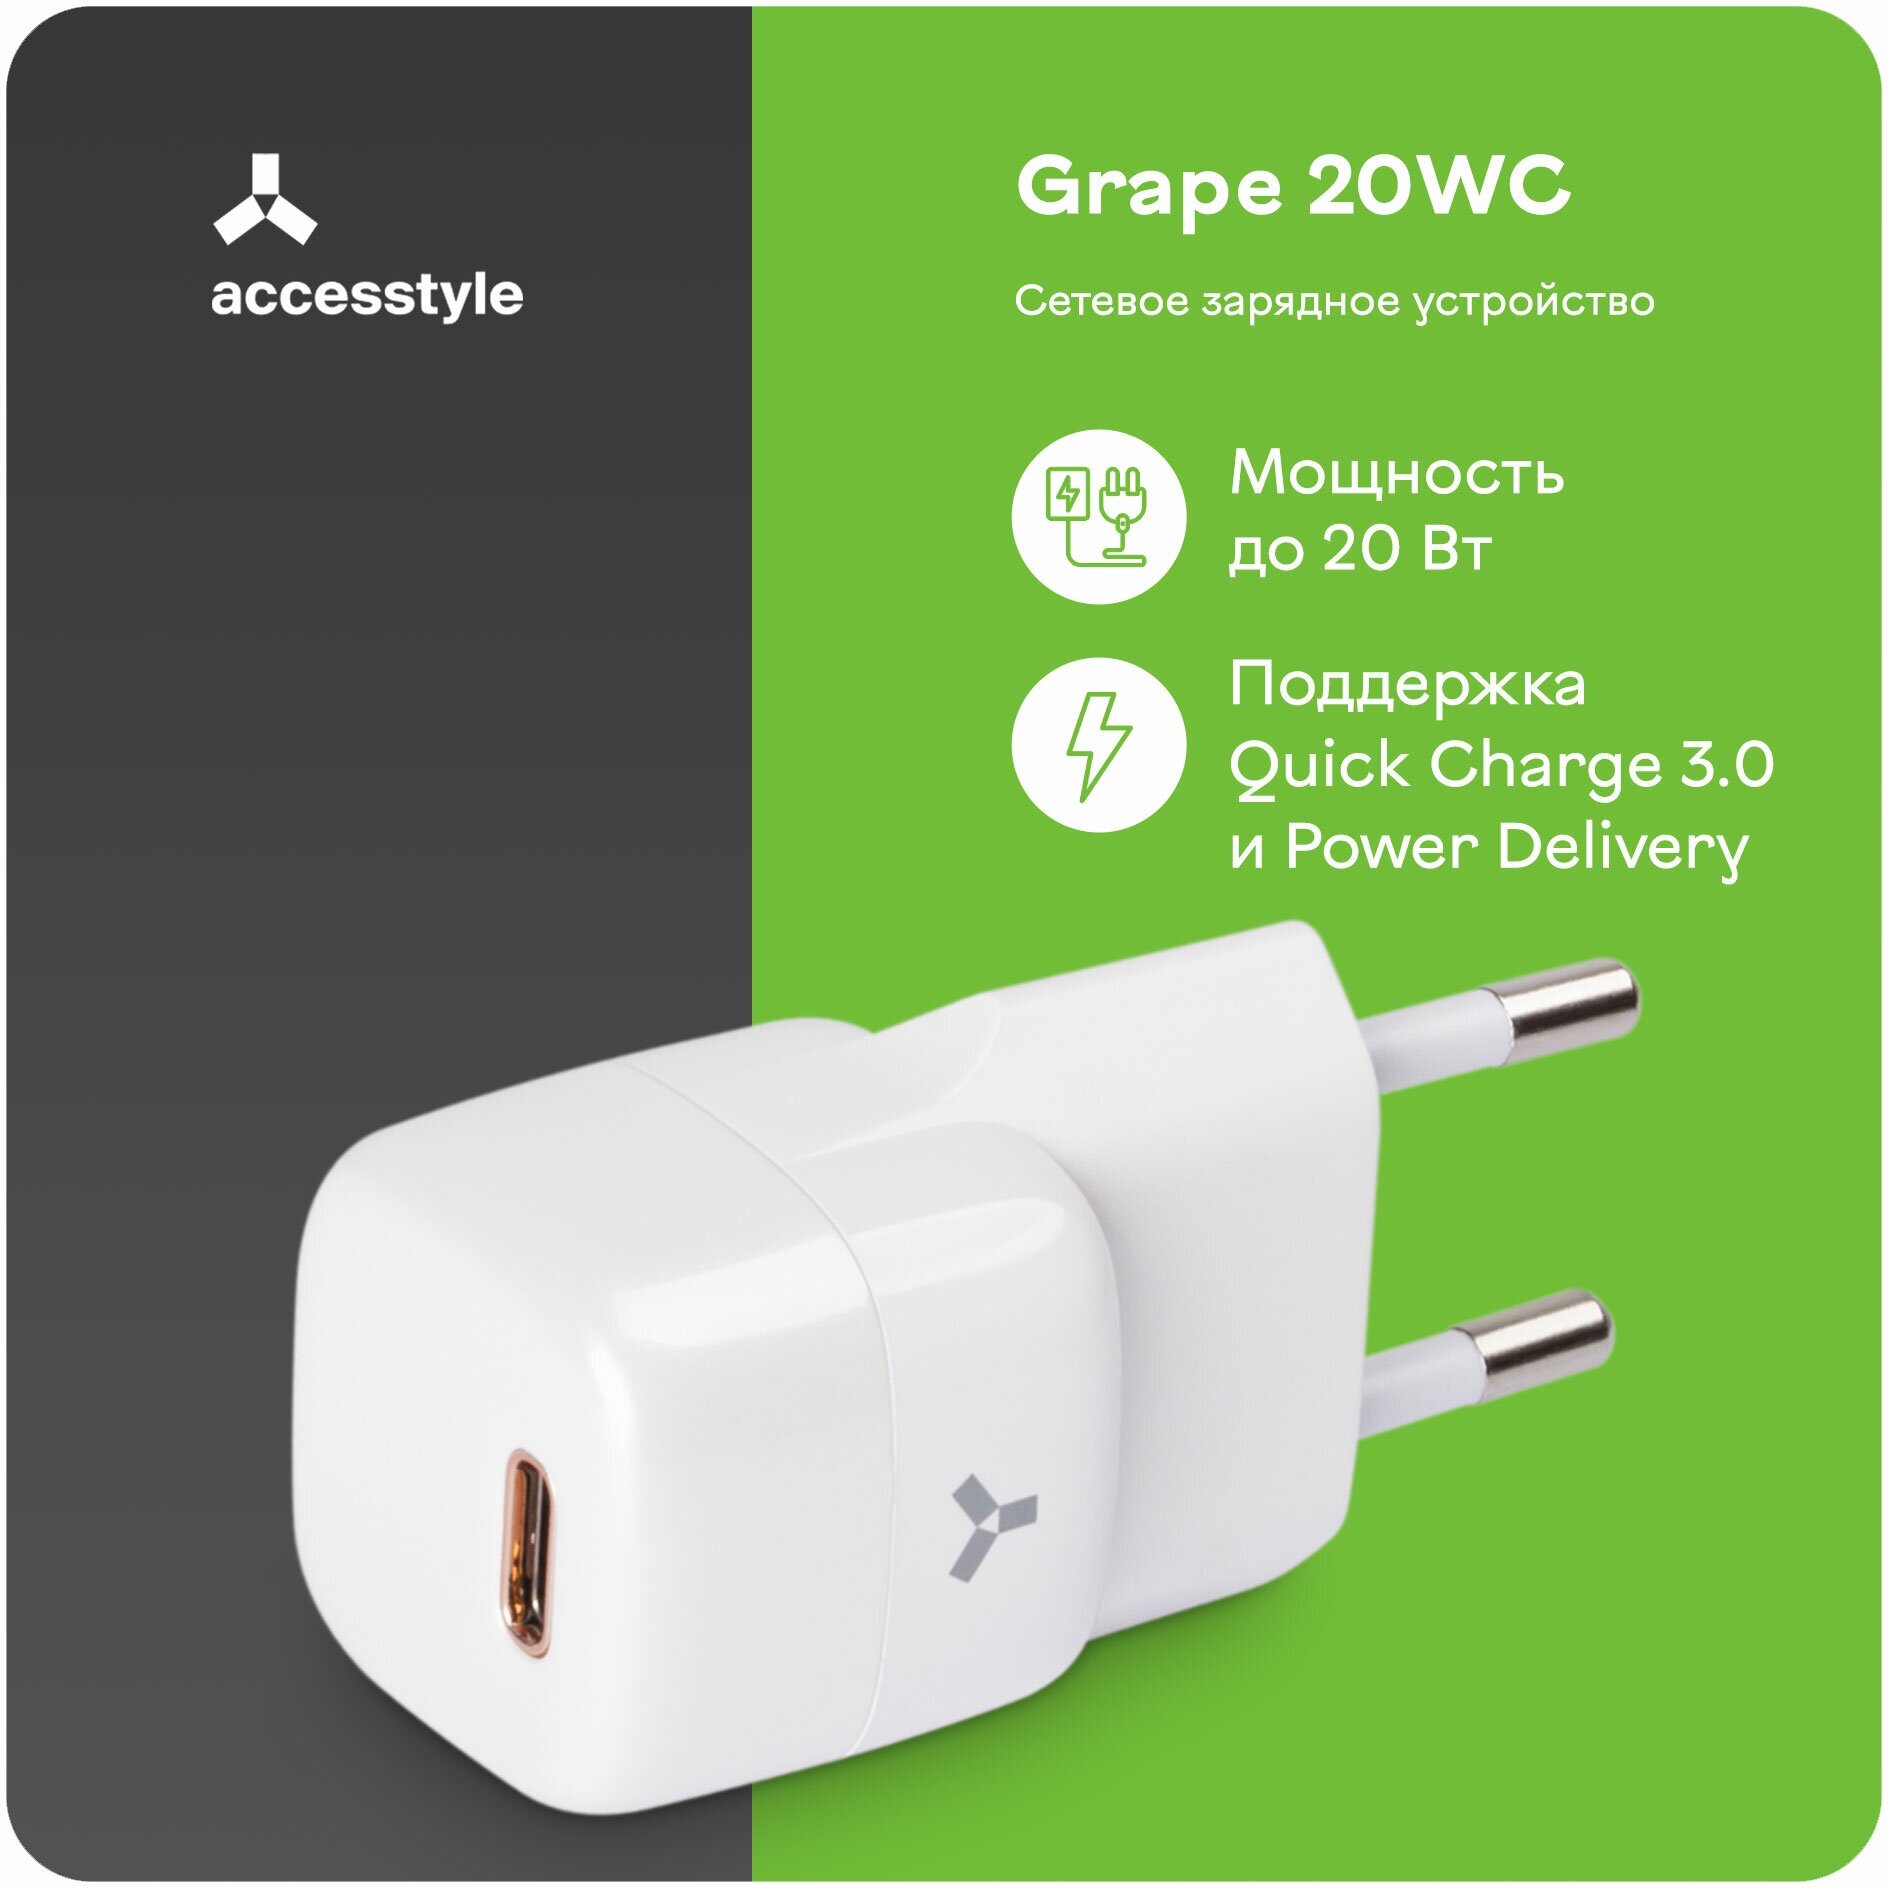 Зарядное устройство Accesstyle Grape 20WC White Silver/Сетевое зарядное устройство / Адаптер питания USB для Apple iPhone, андроид